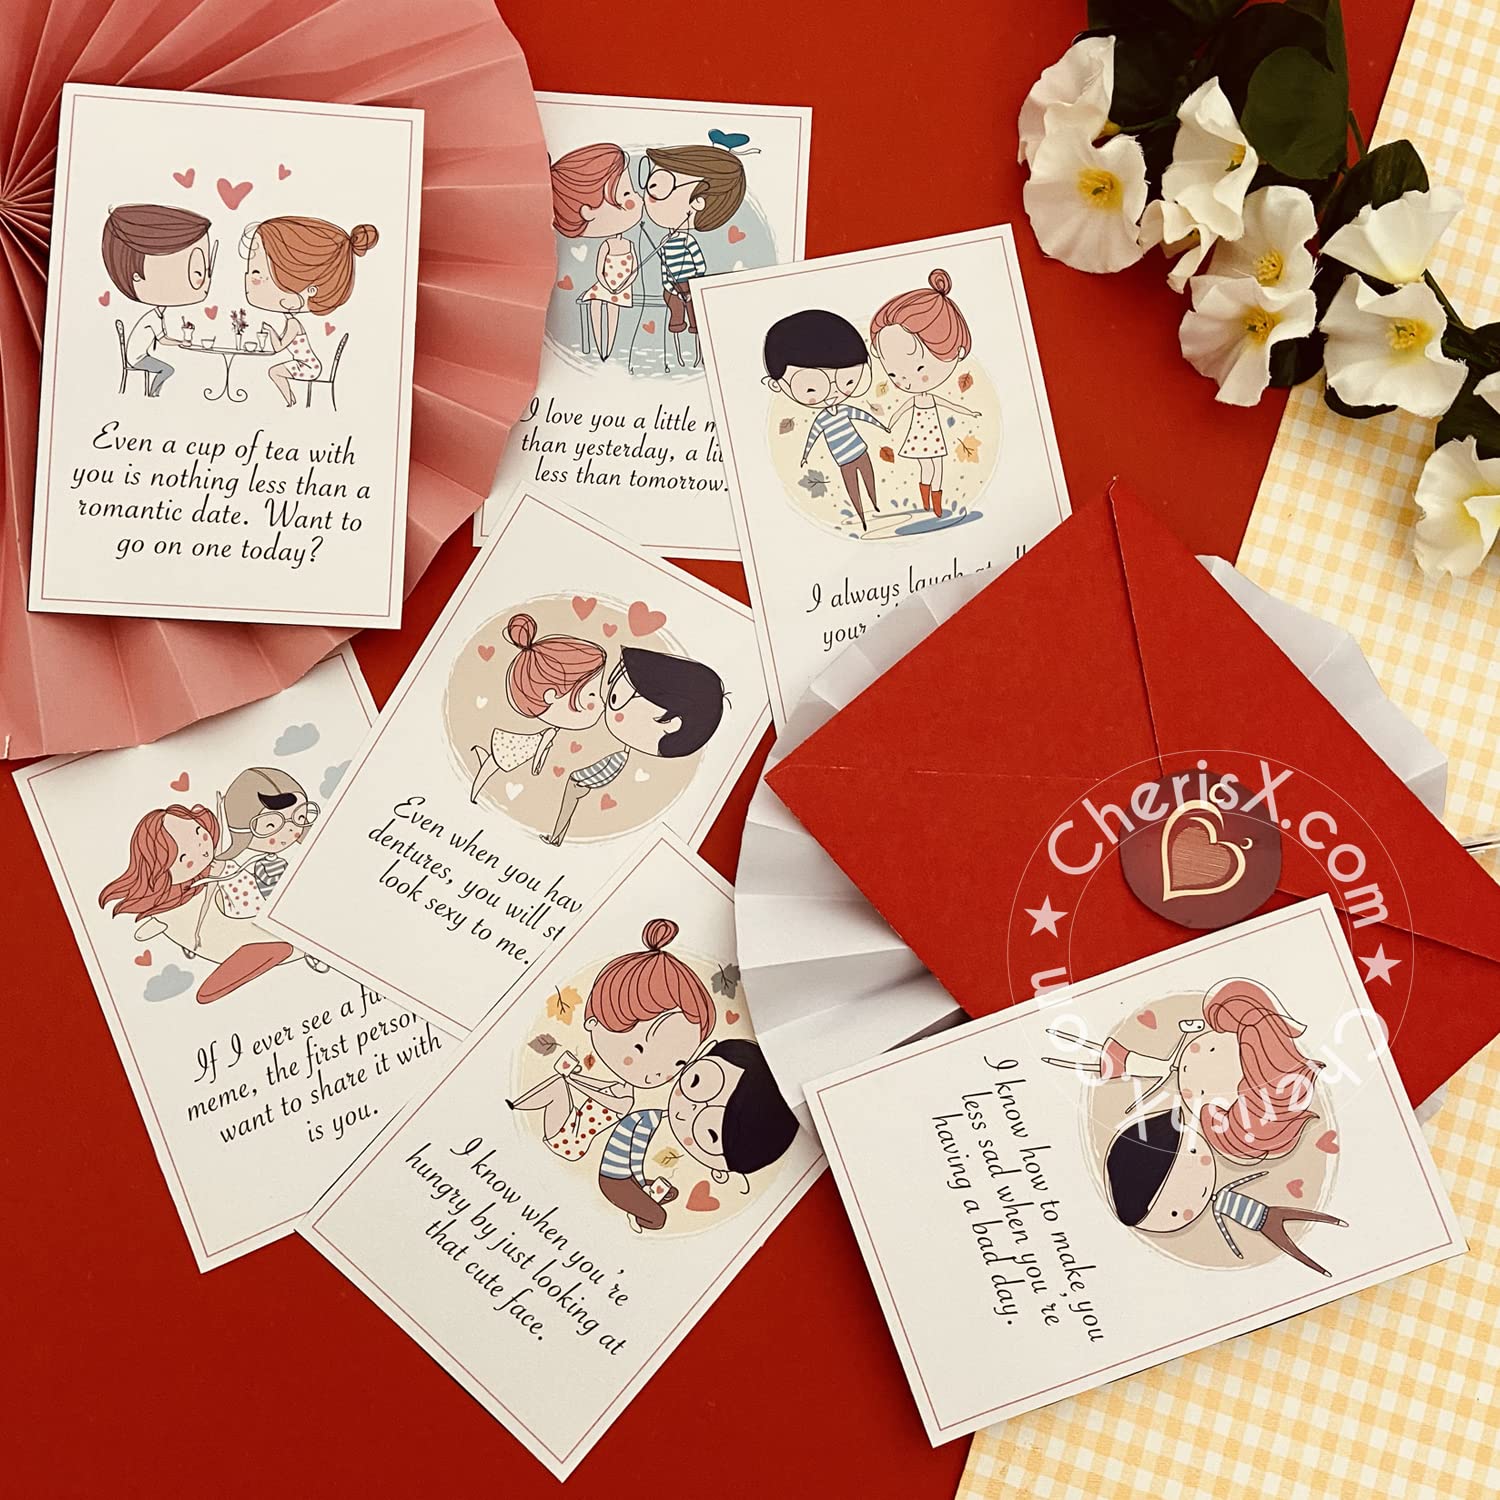 7 Reasons Why I Love You - Valentine Day Gift for Girls Boys Girlfriend Boyfriend Husband Wife - CherishX Partystore